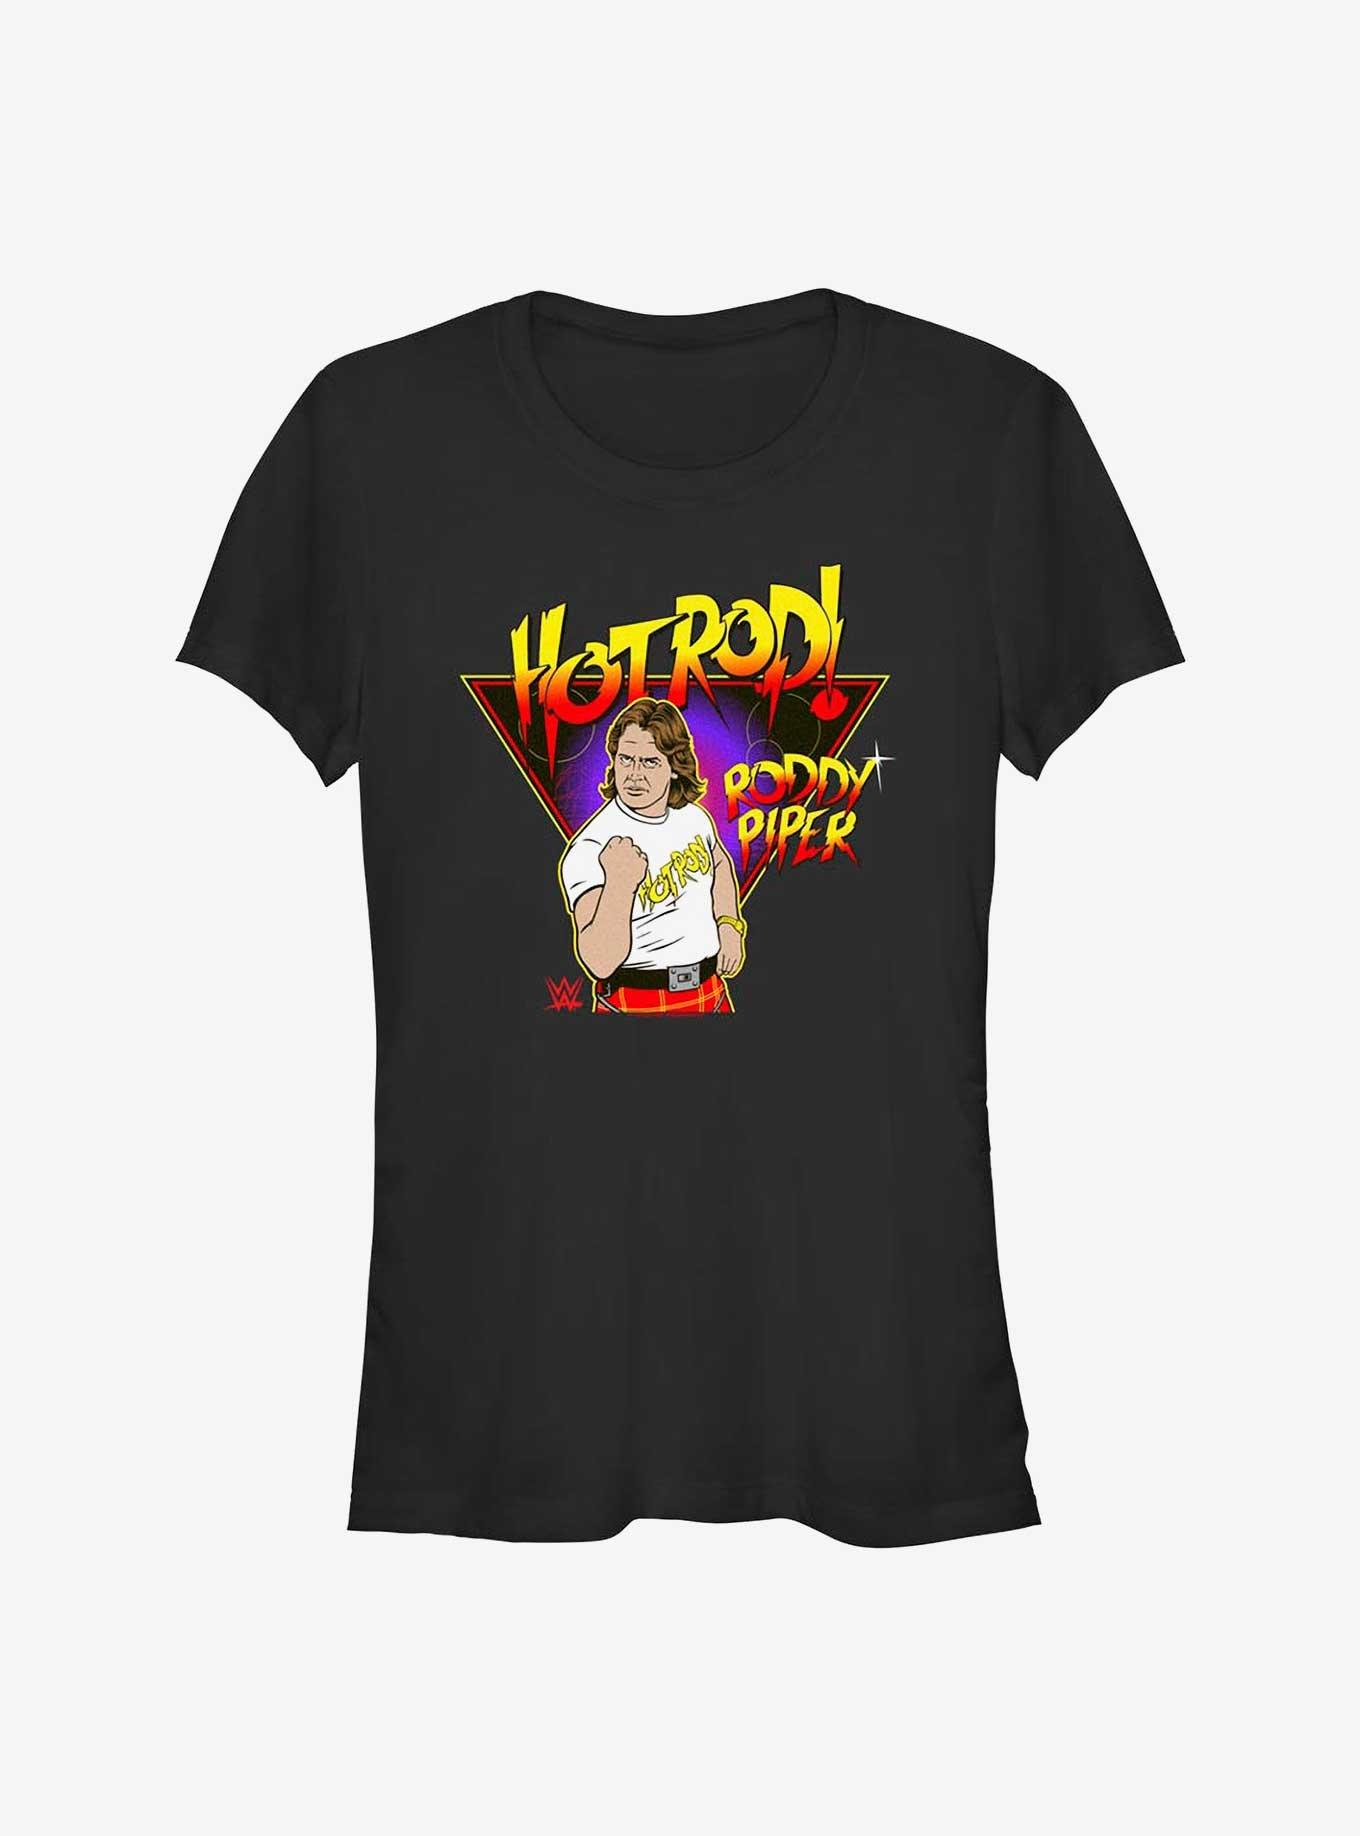 WWE Hot Rod Roddy Piper Girls T-Shirt